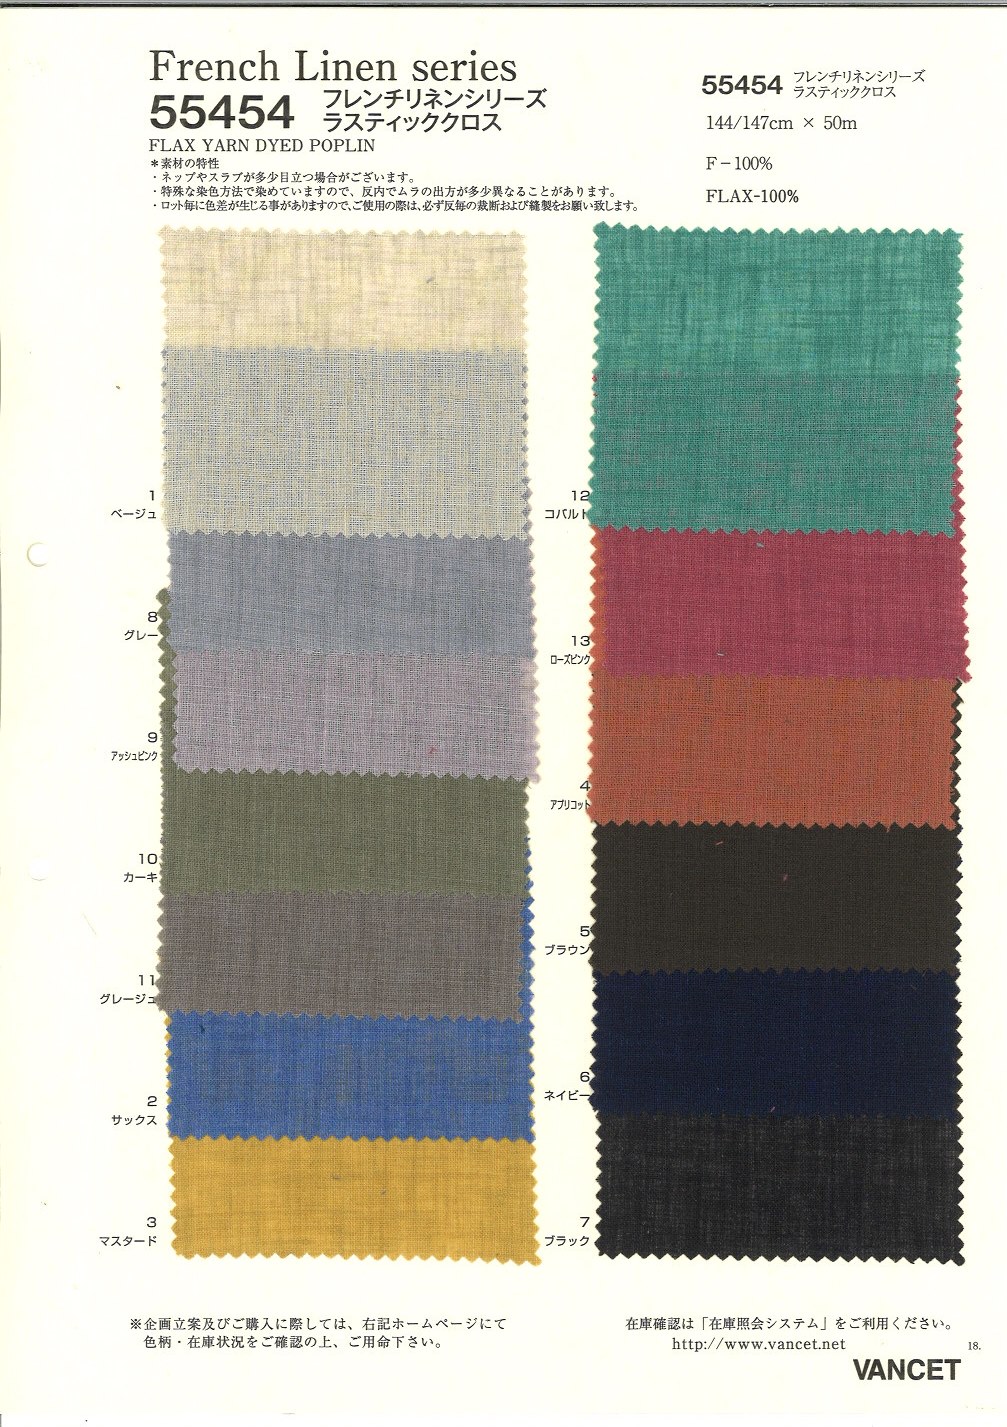 55454 Serie Lino Francés Paño Rústico[Fabrica Textil] VANCET